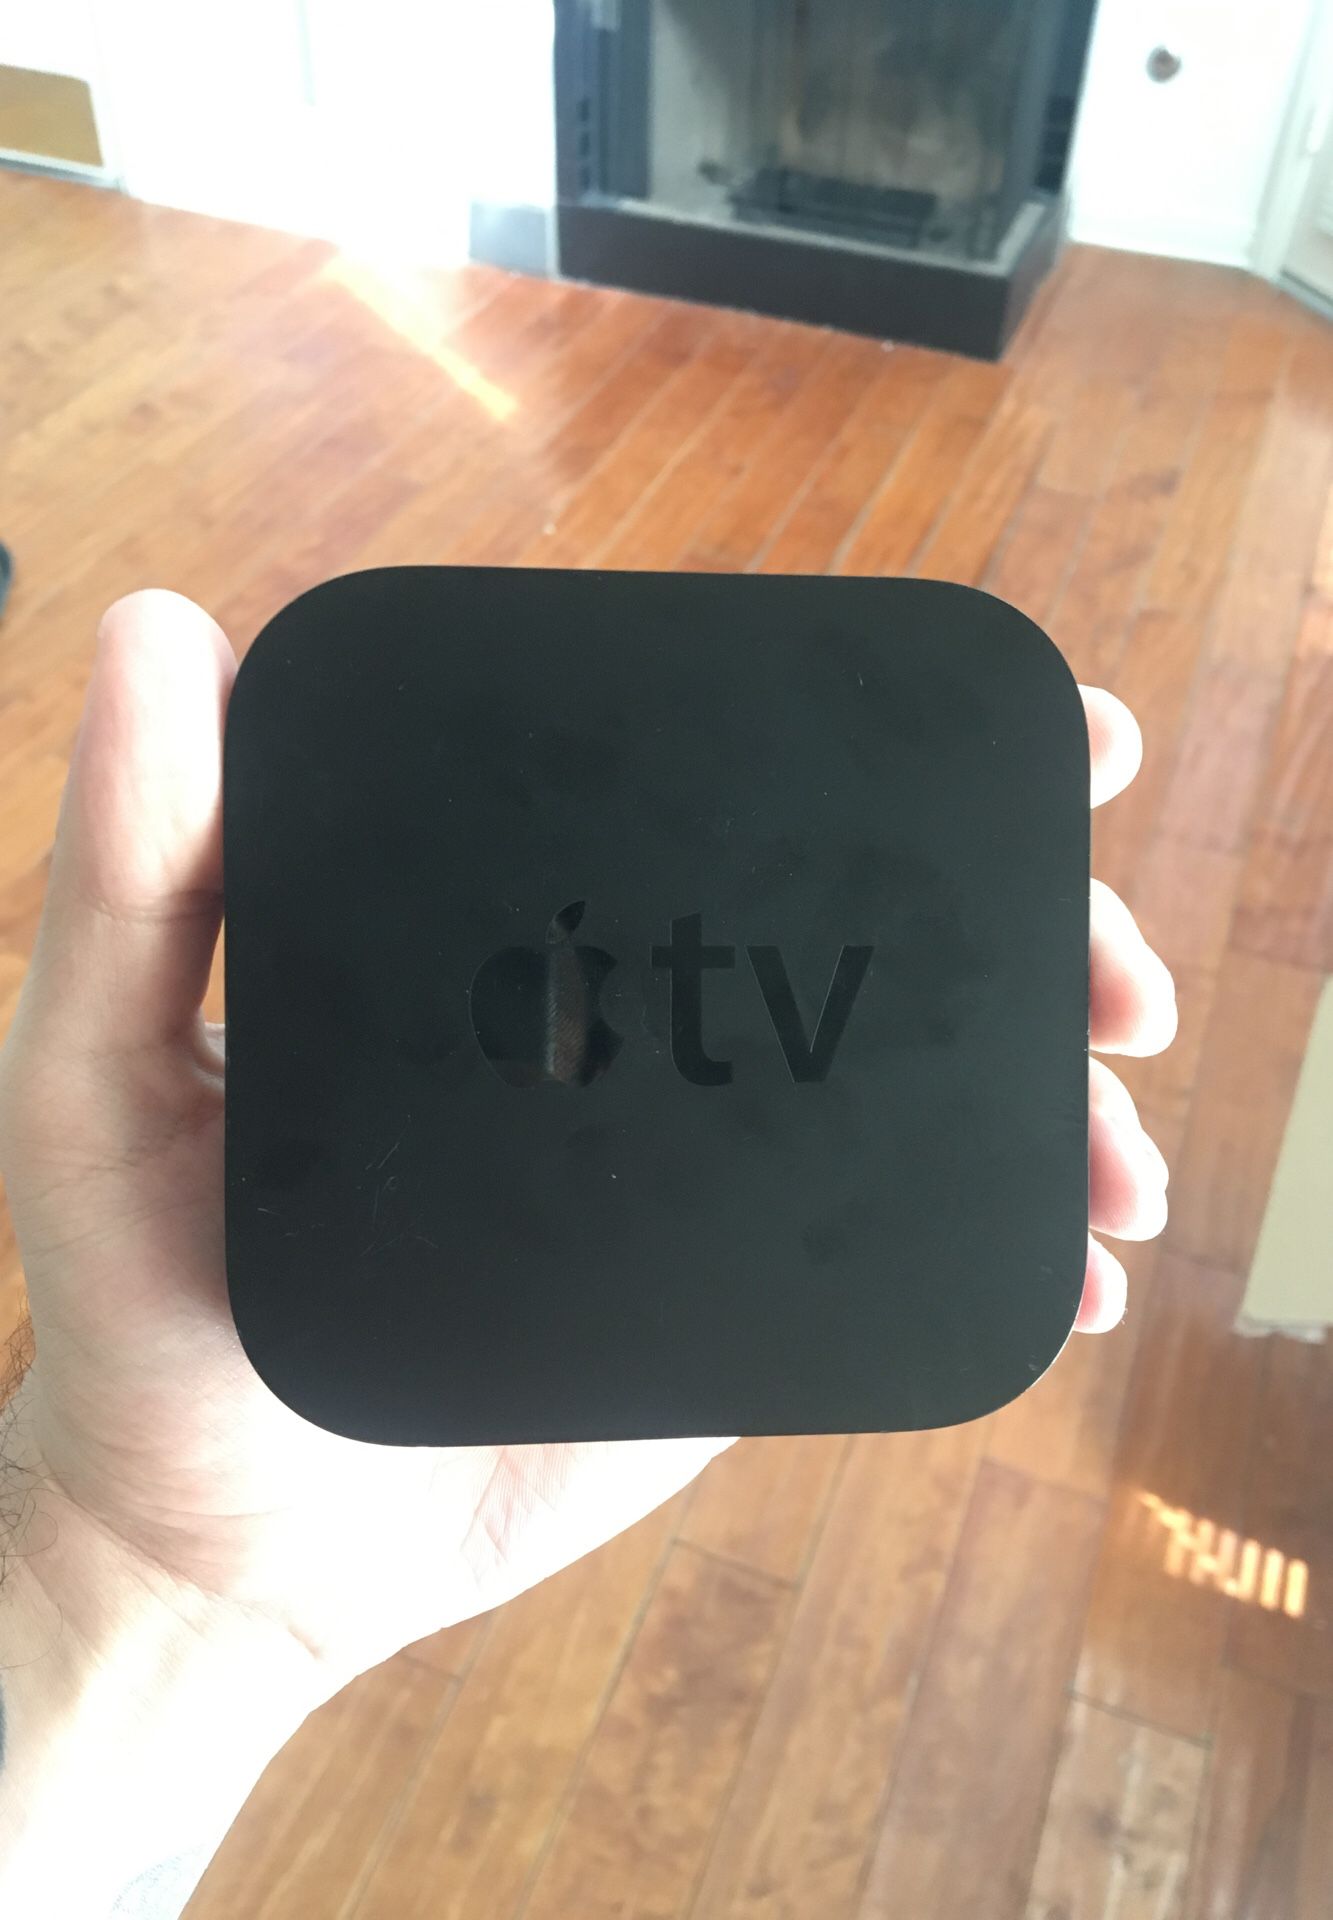 Apple TV third generation ( no remote )